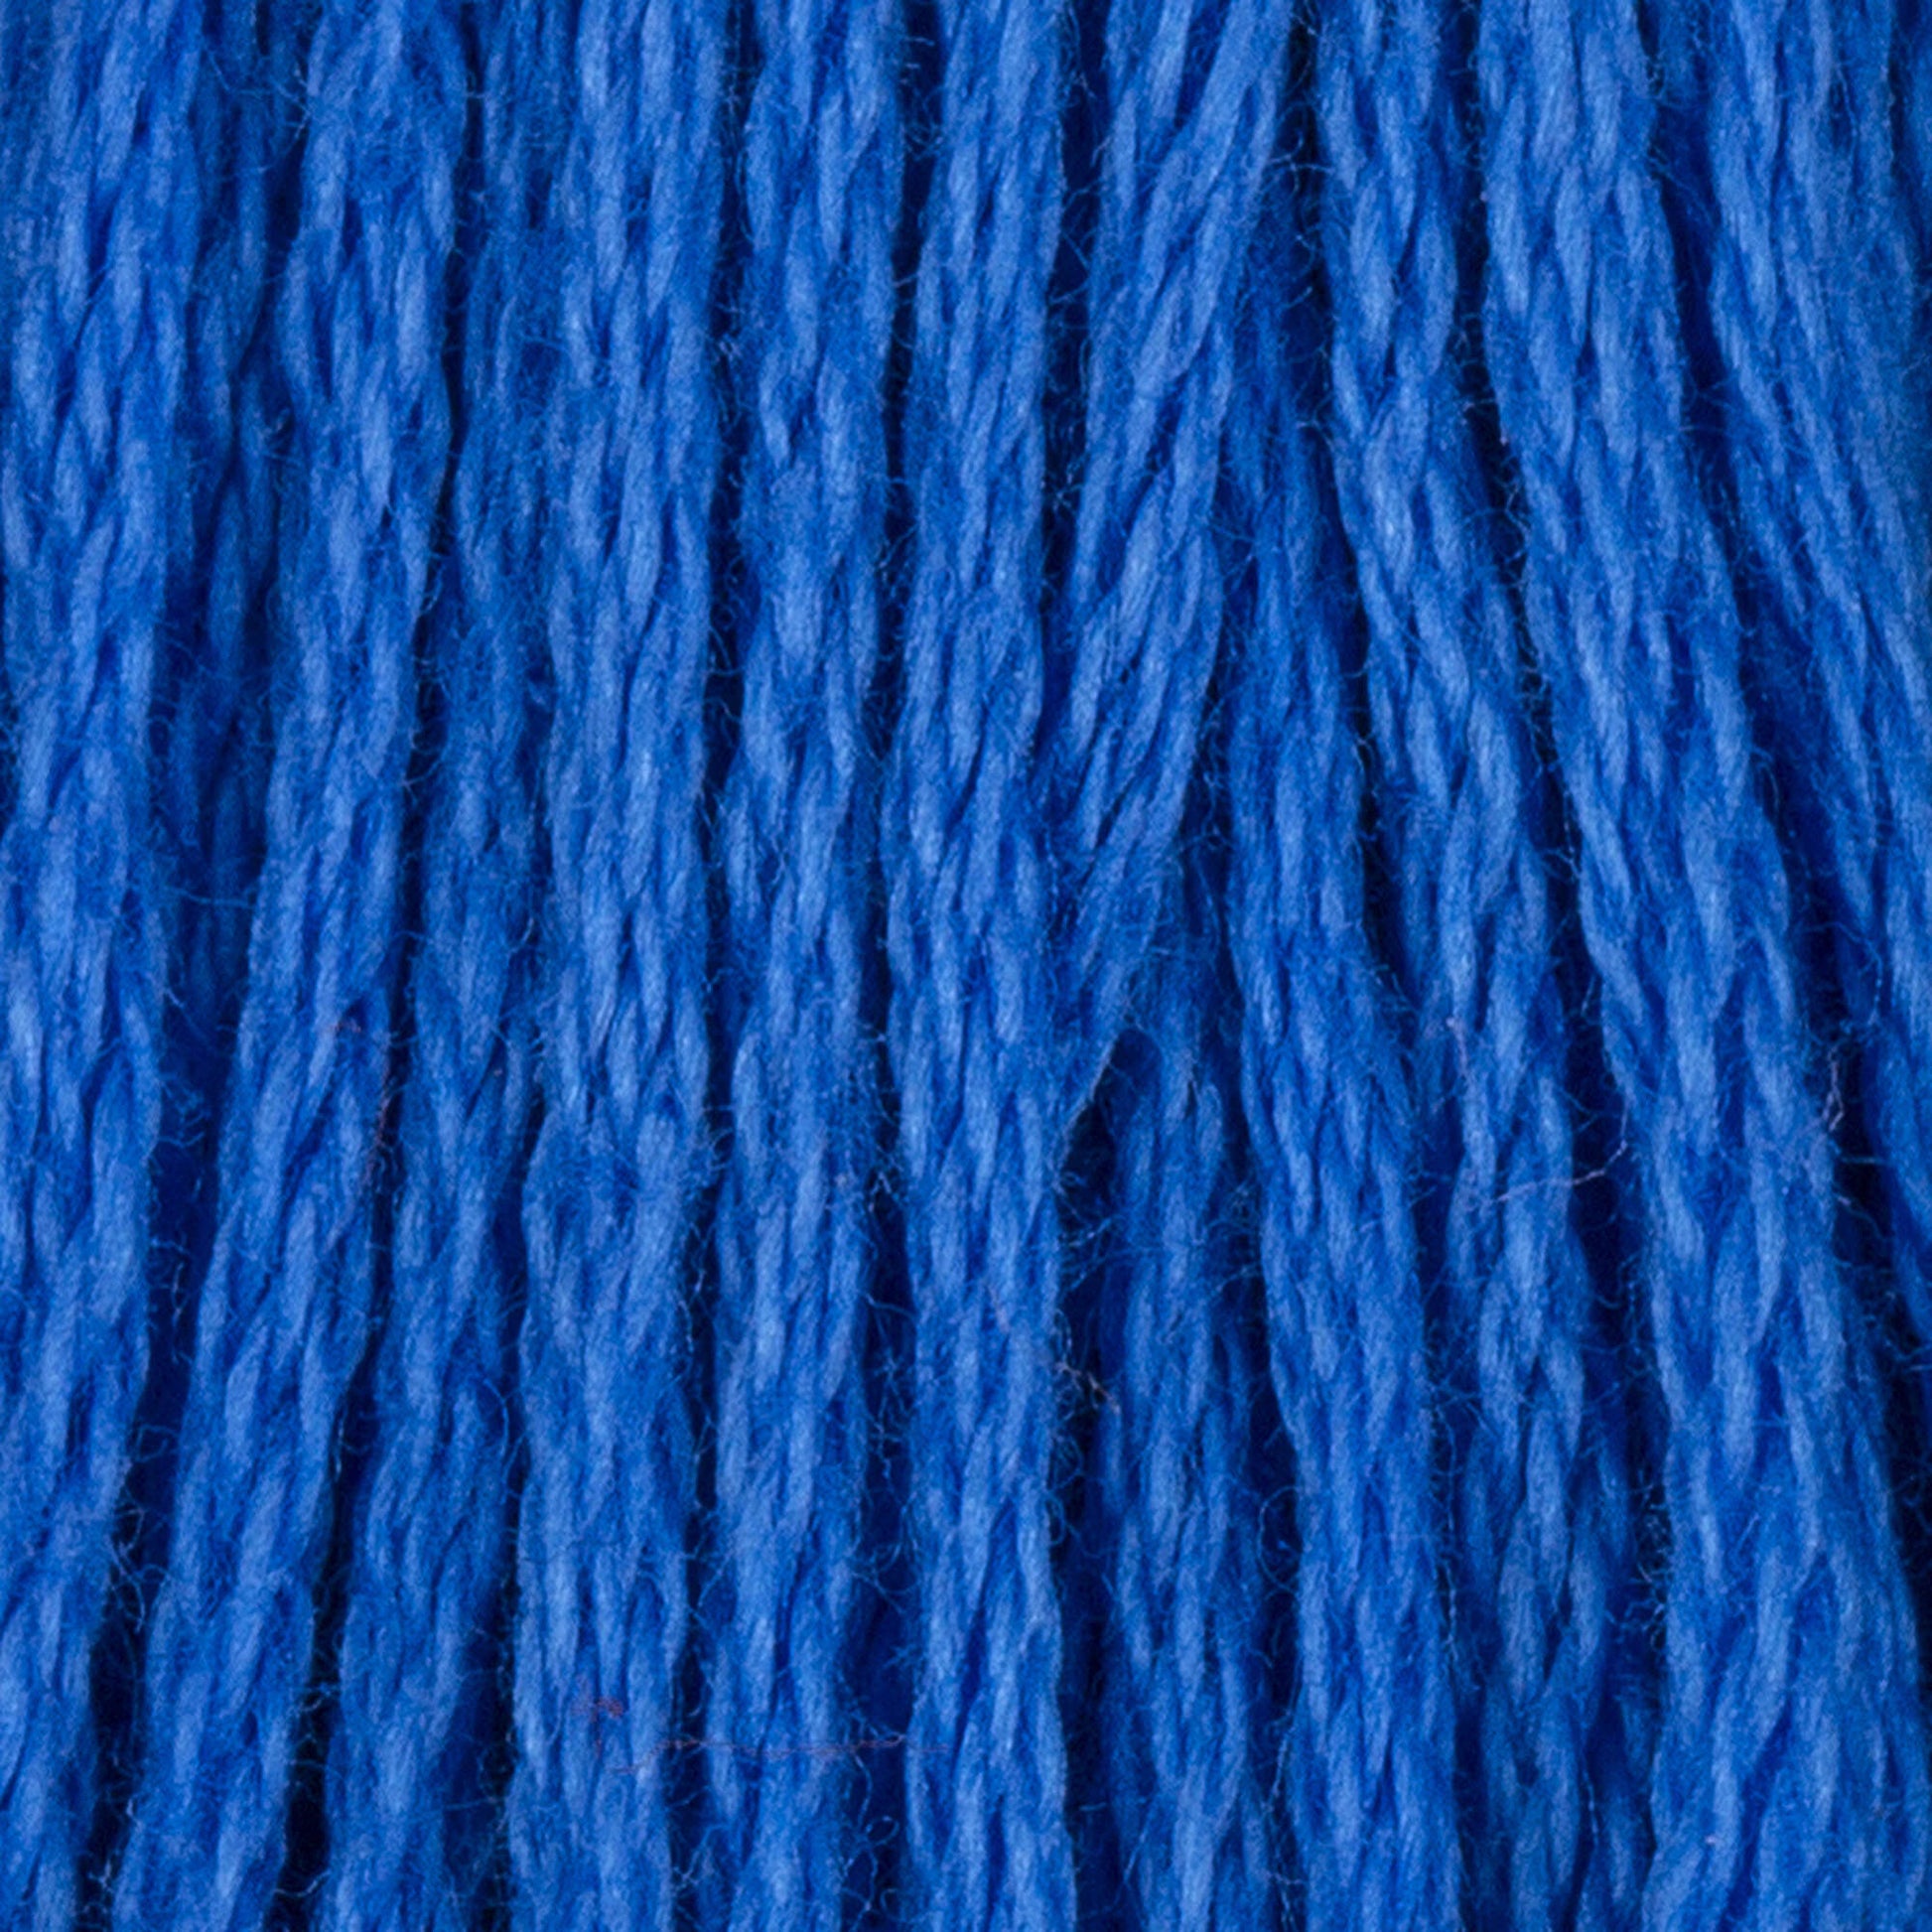 Coats & Clark Cotton Embroidery Floss Cornflower Blue Dark